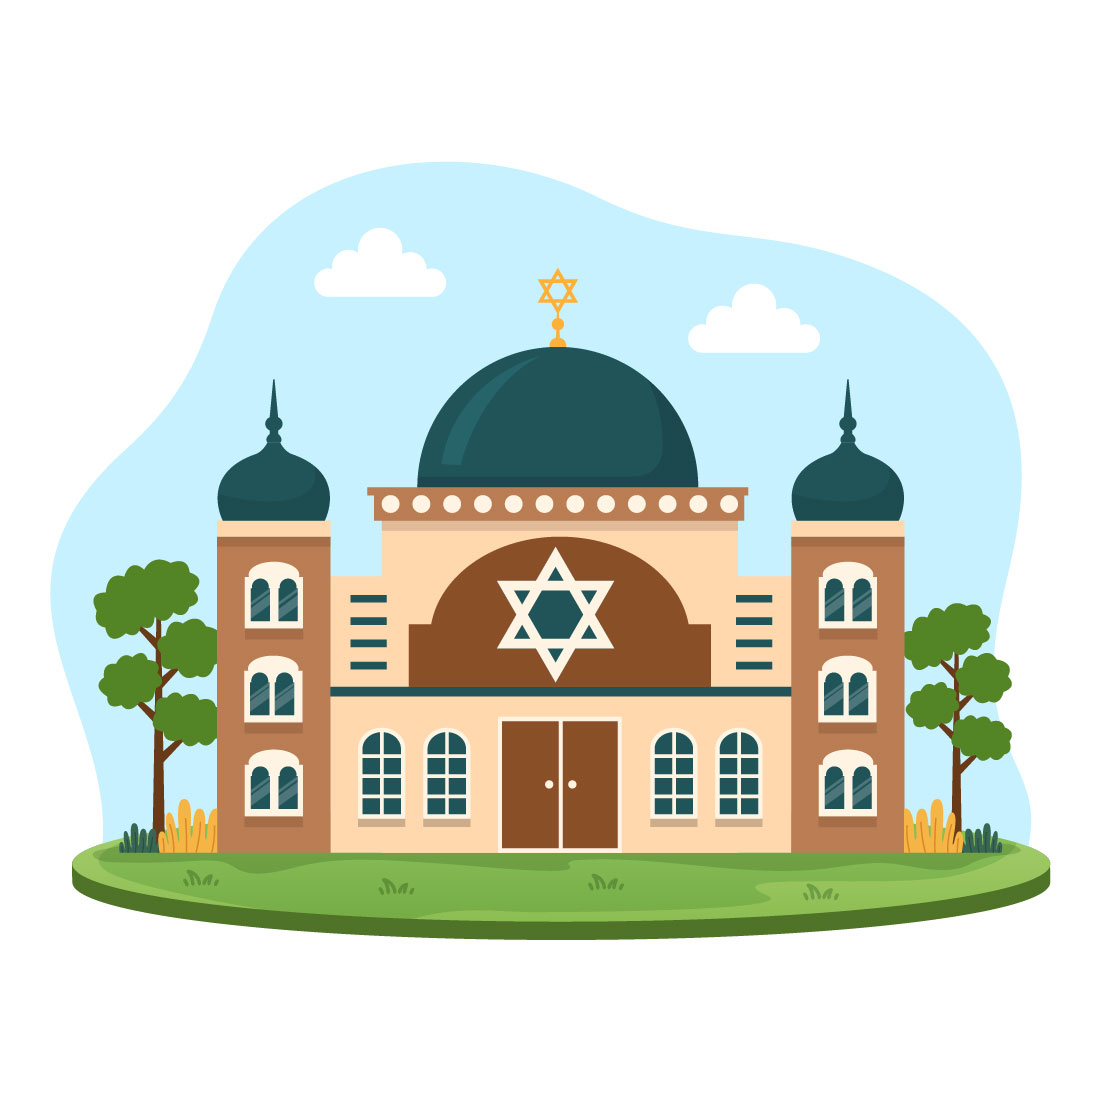 Synagogue Building or Jewish Temple Design Illustration cover image.